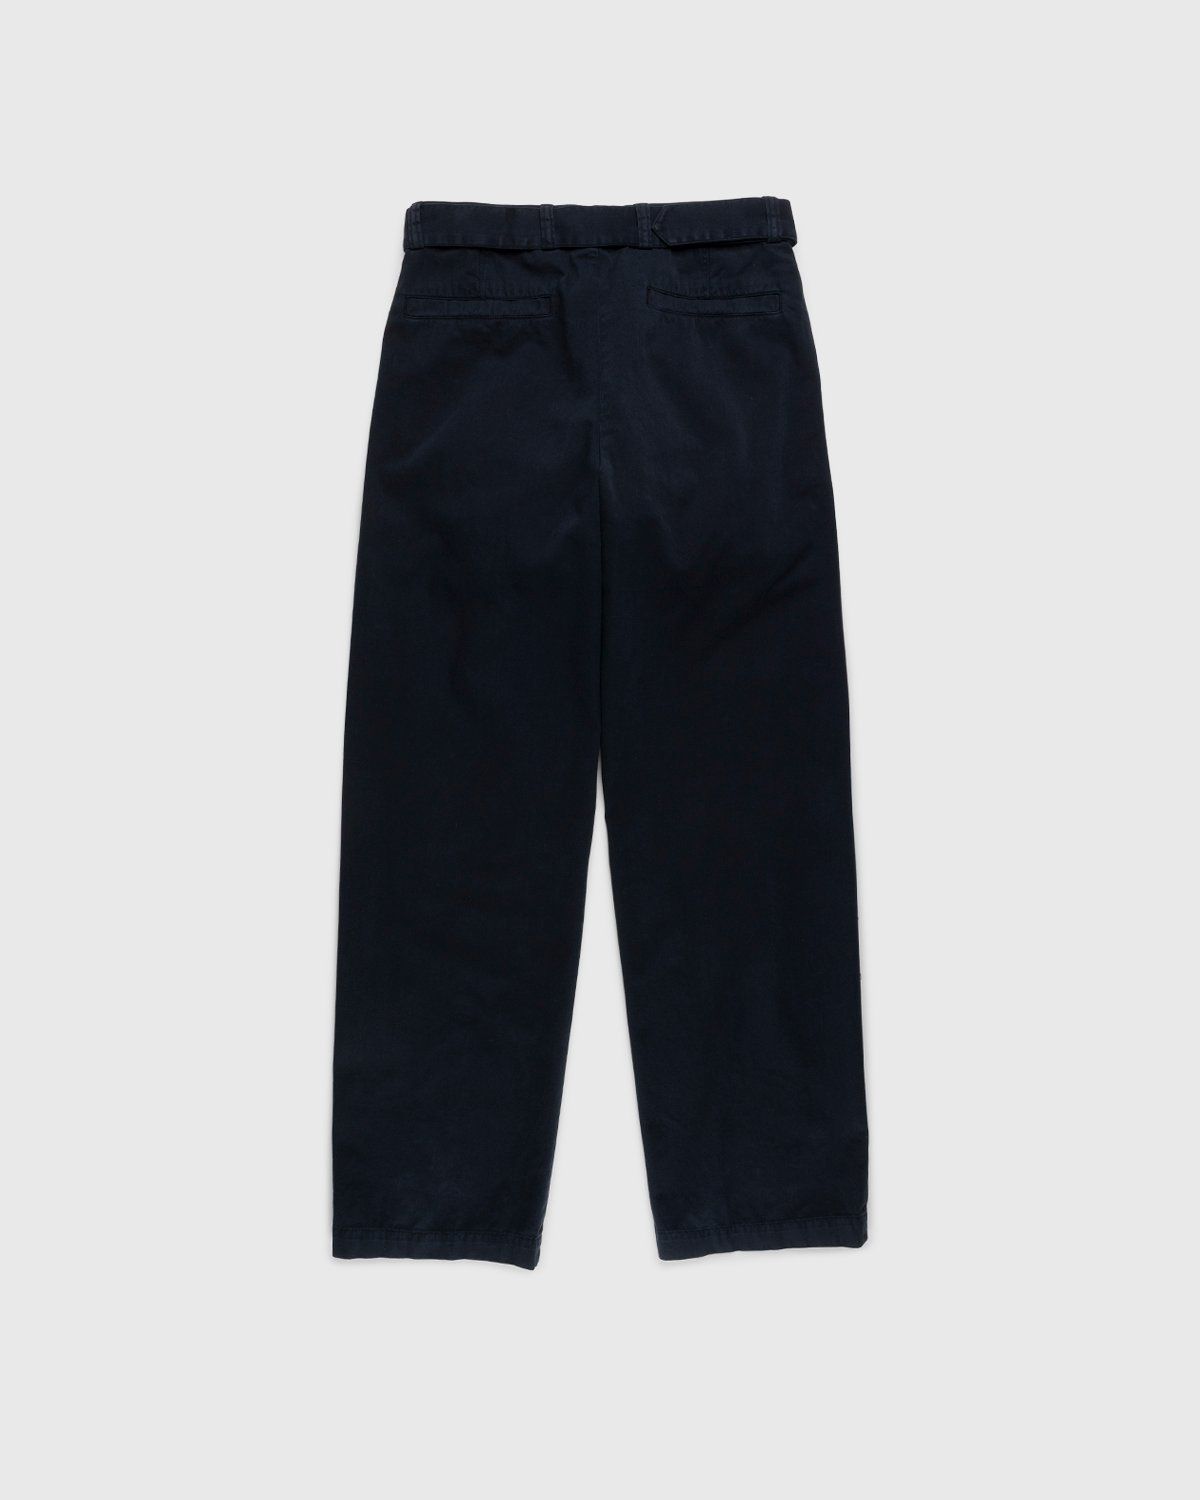 Dries van Noten – Penson Pants Navy - Pants - Blue - Image 2